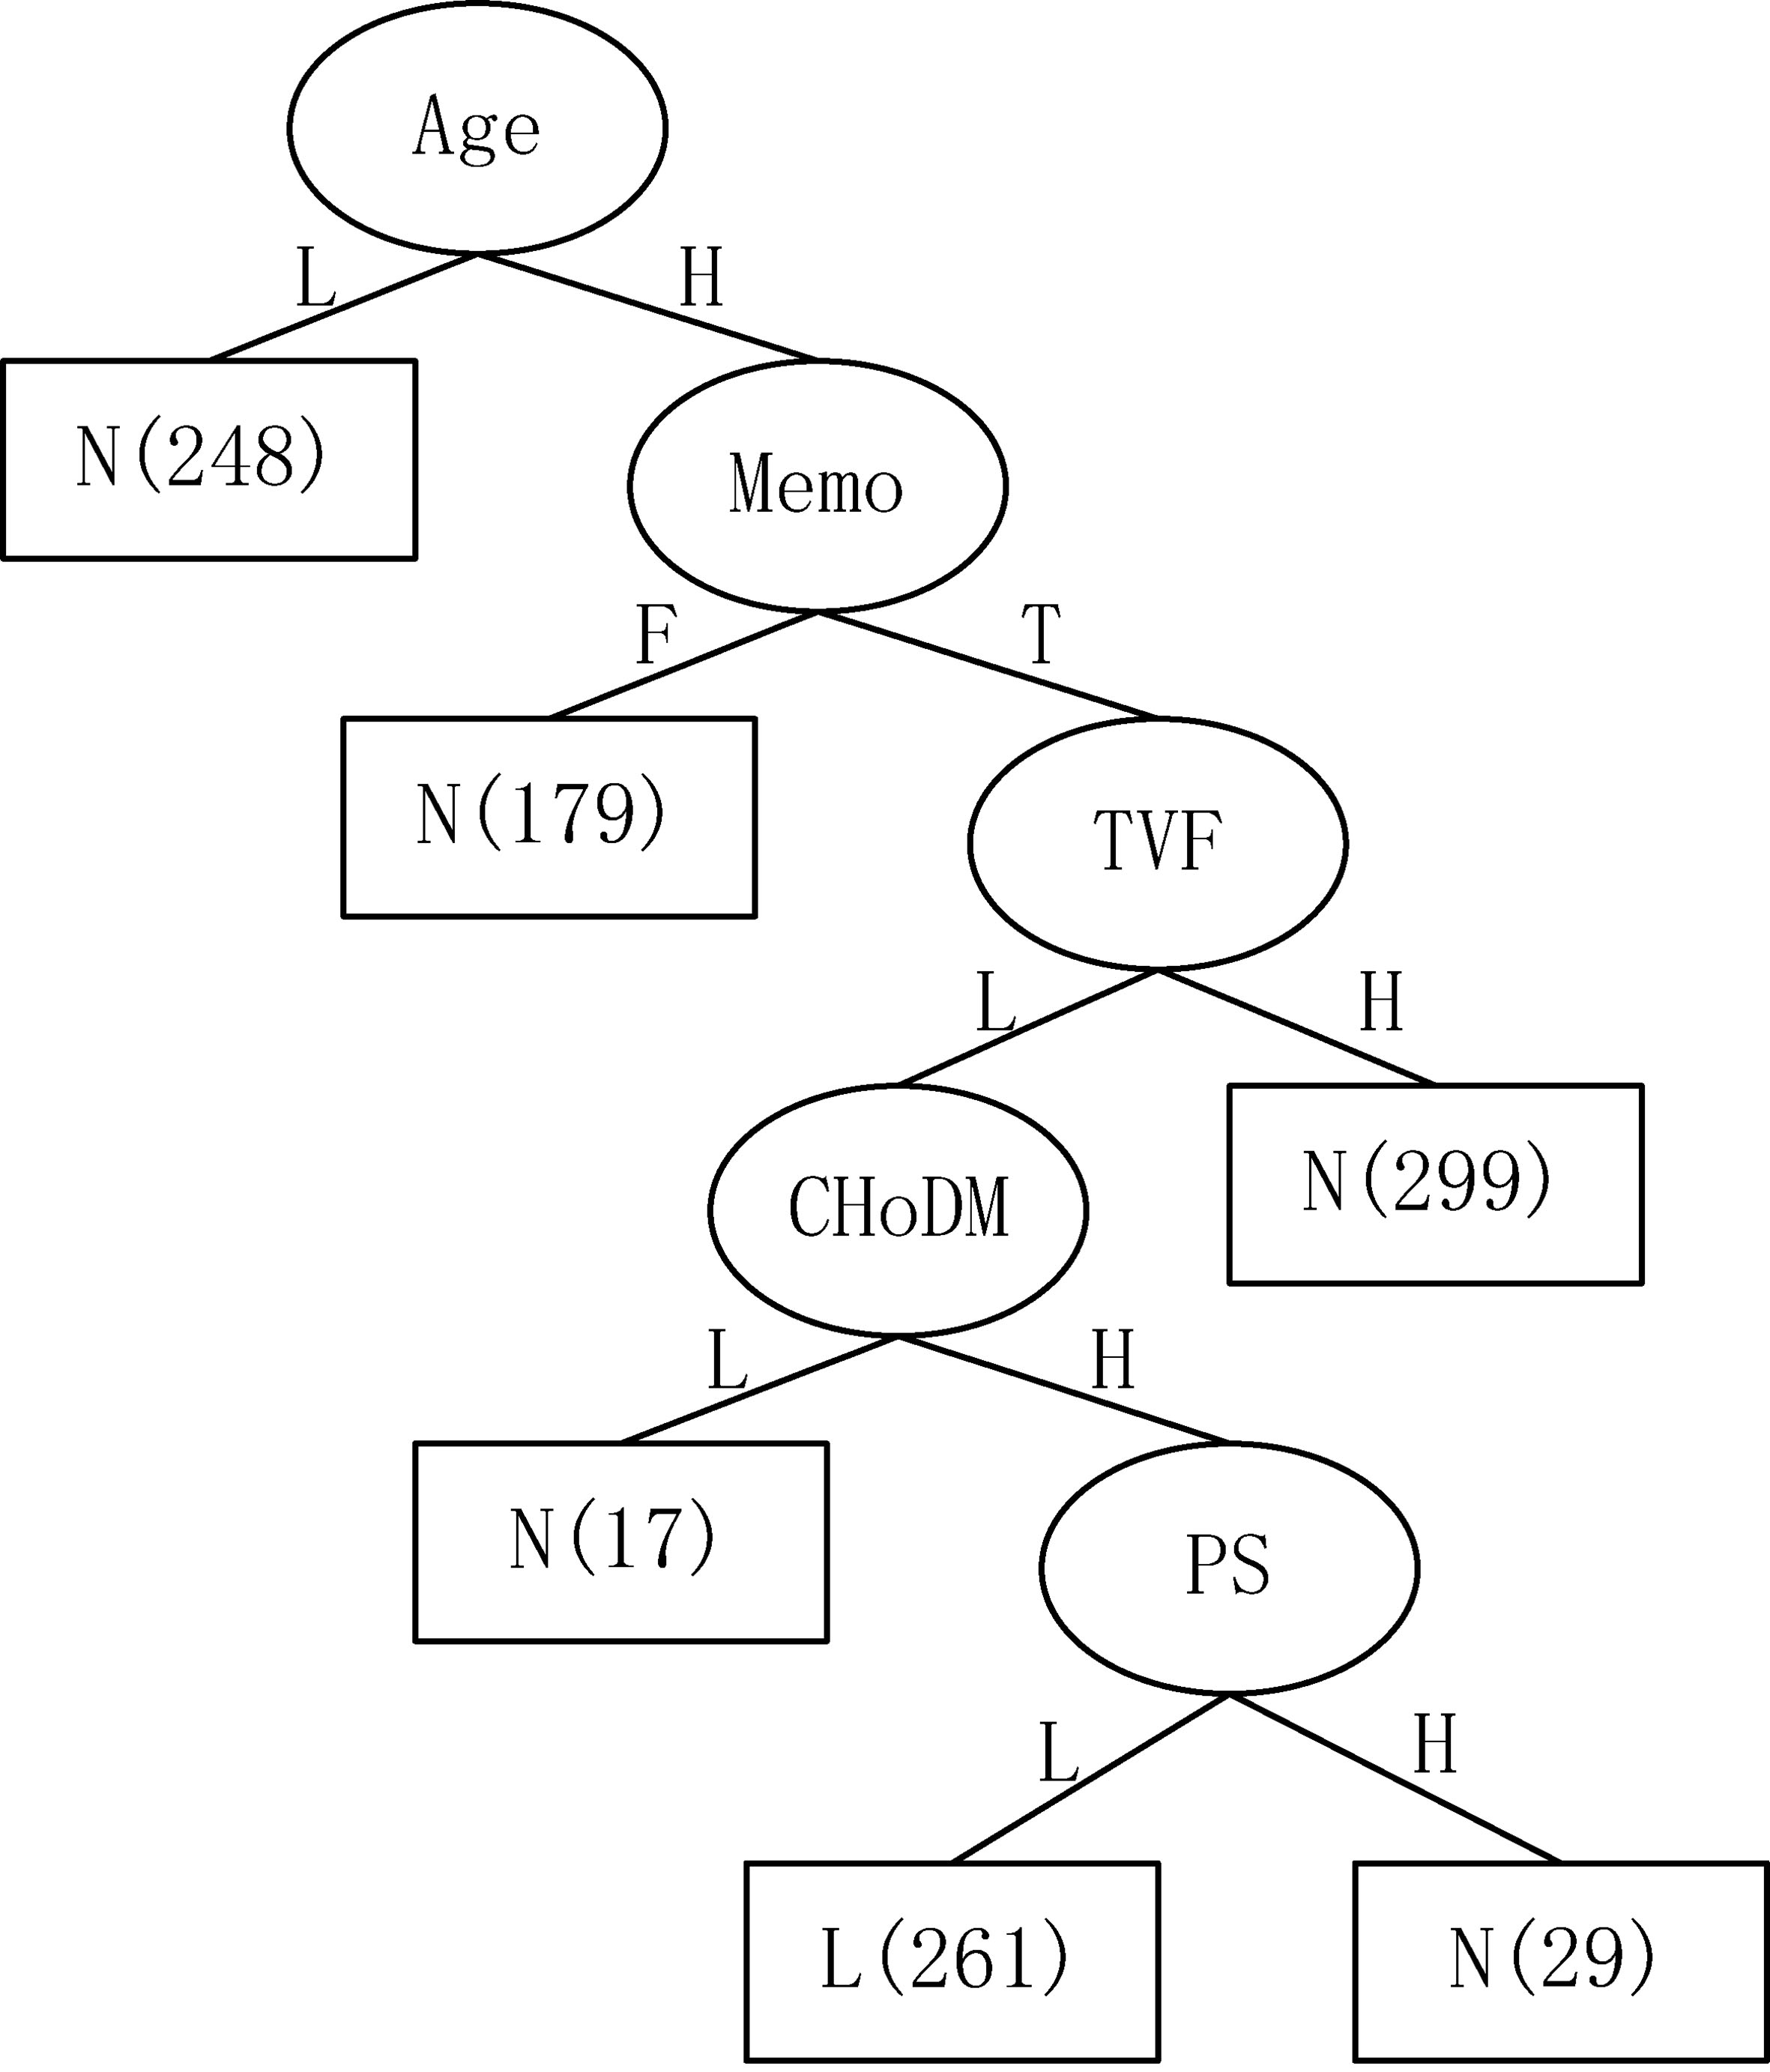 The second-level decision tree (Tree 6).